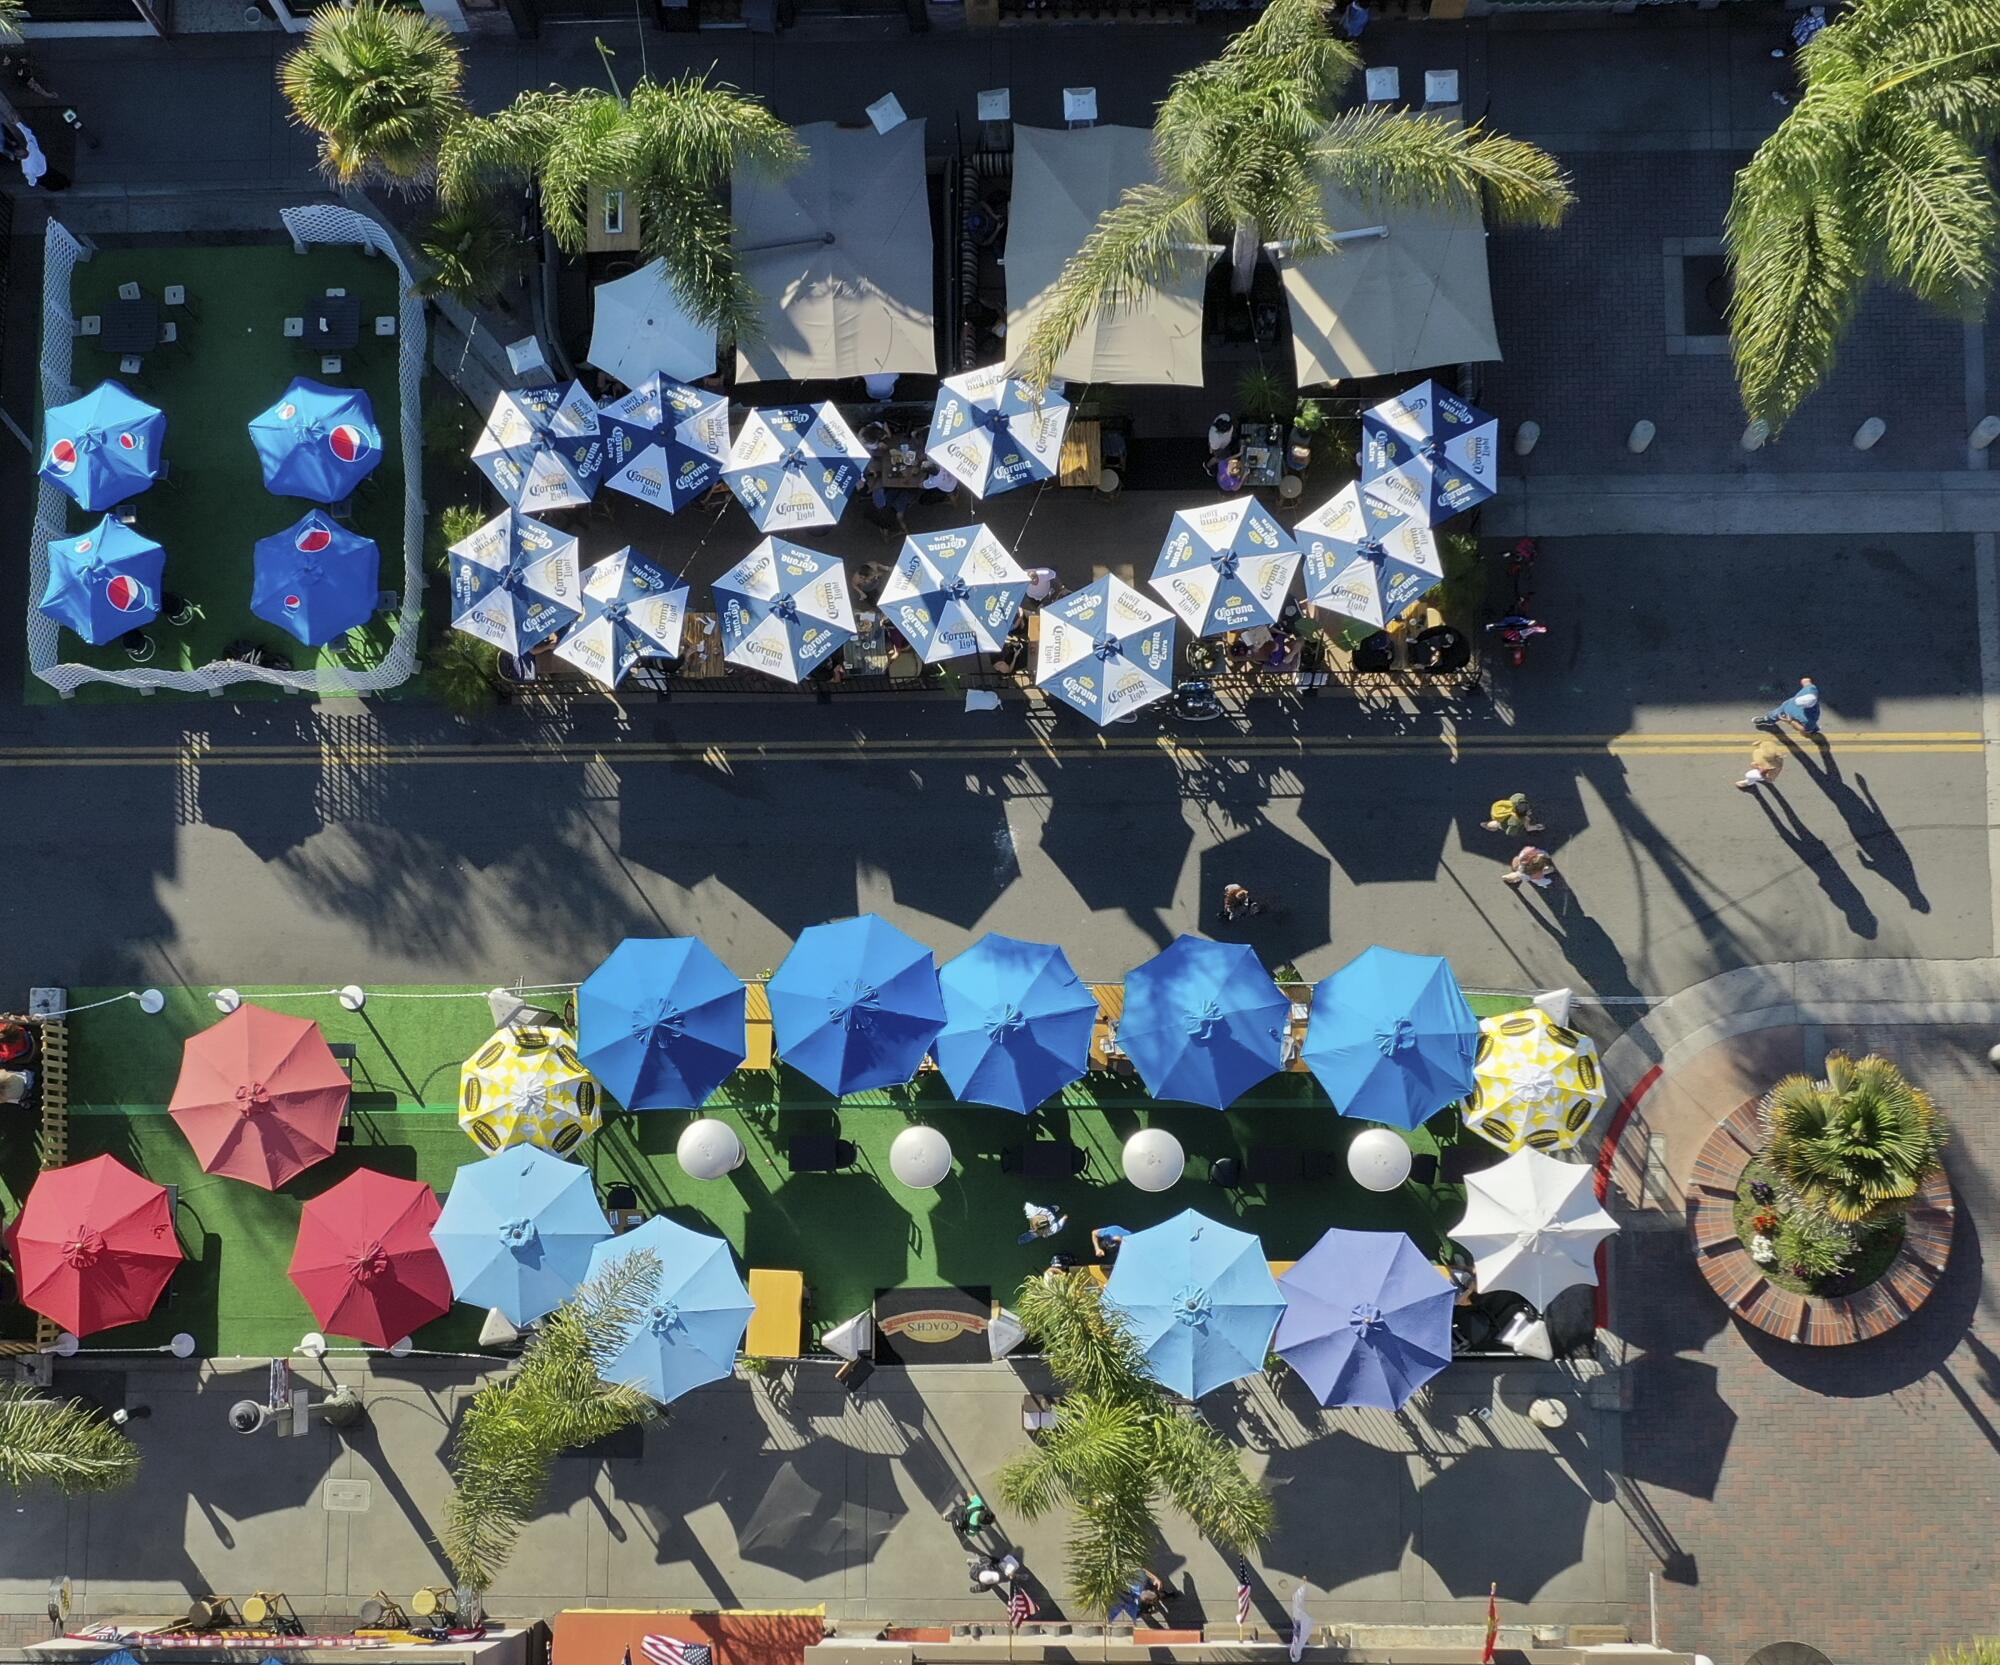 Dining under umbrellas in Huntington Beach